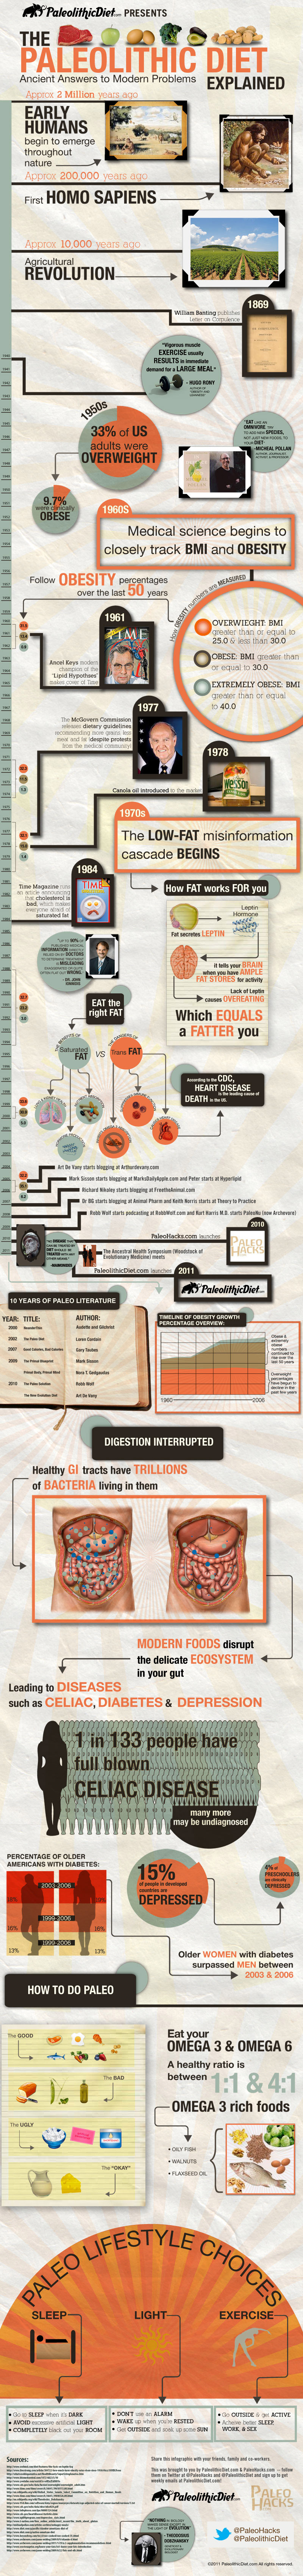 Paleolithic Diet Explained Infographic